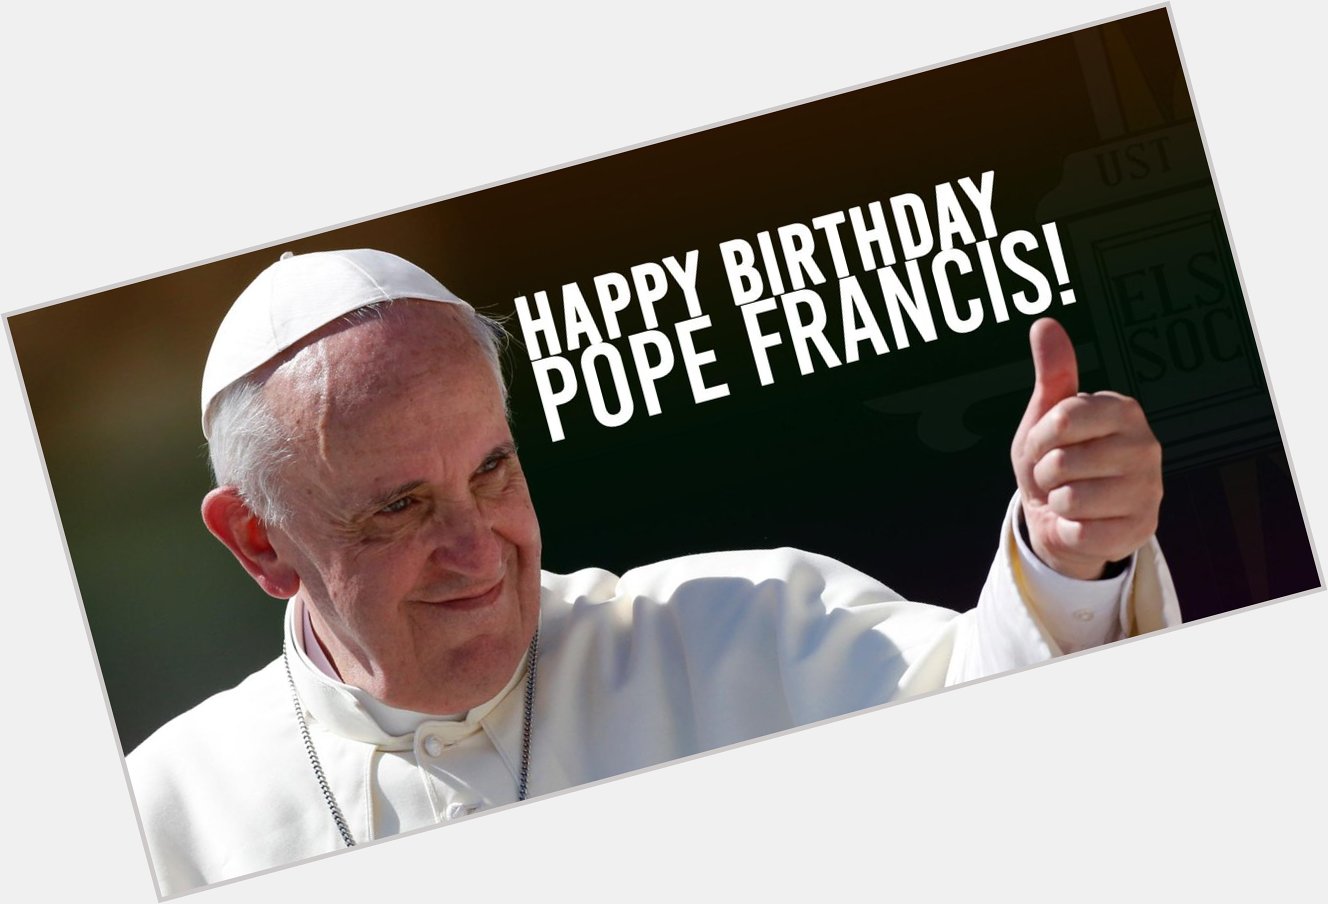 " Happy 78th birthday, Pope Francis! 